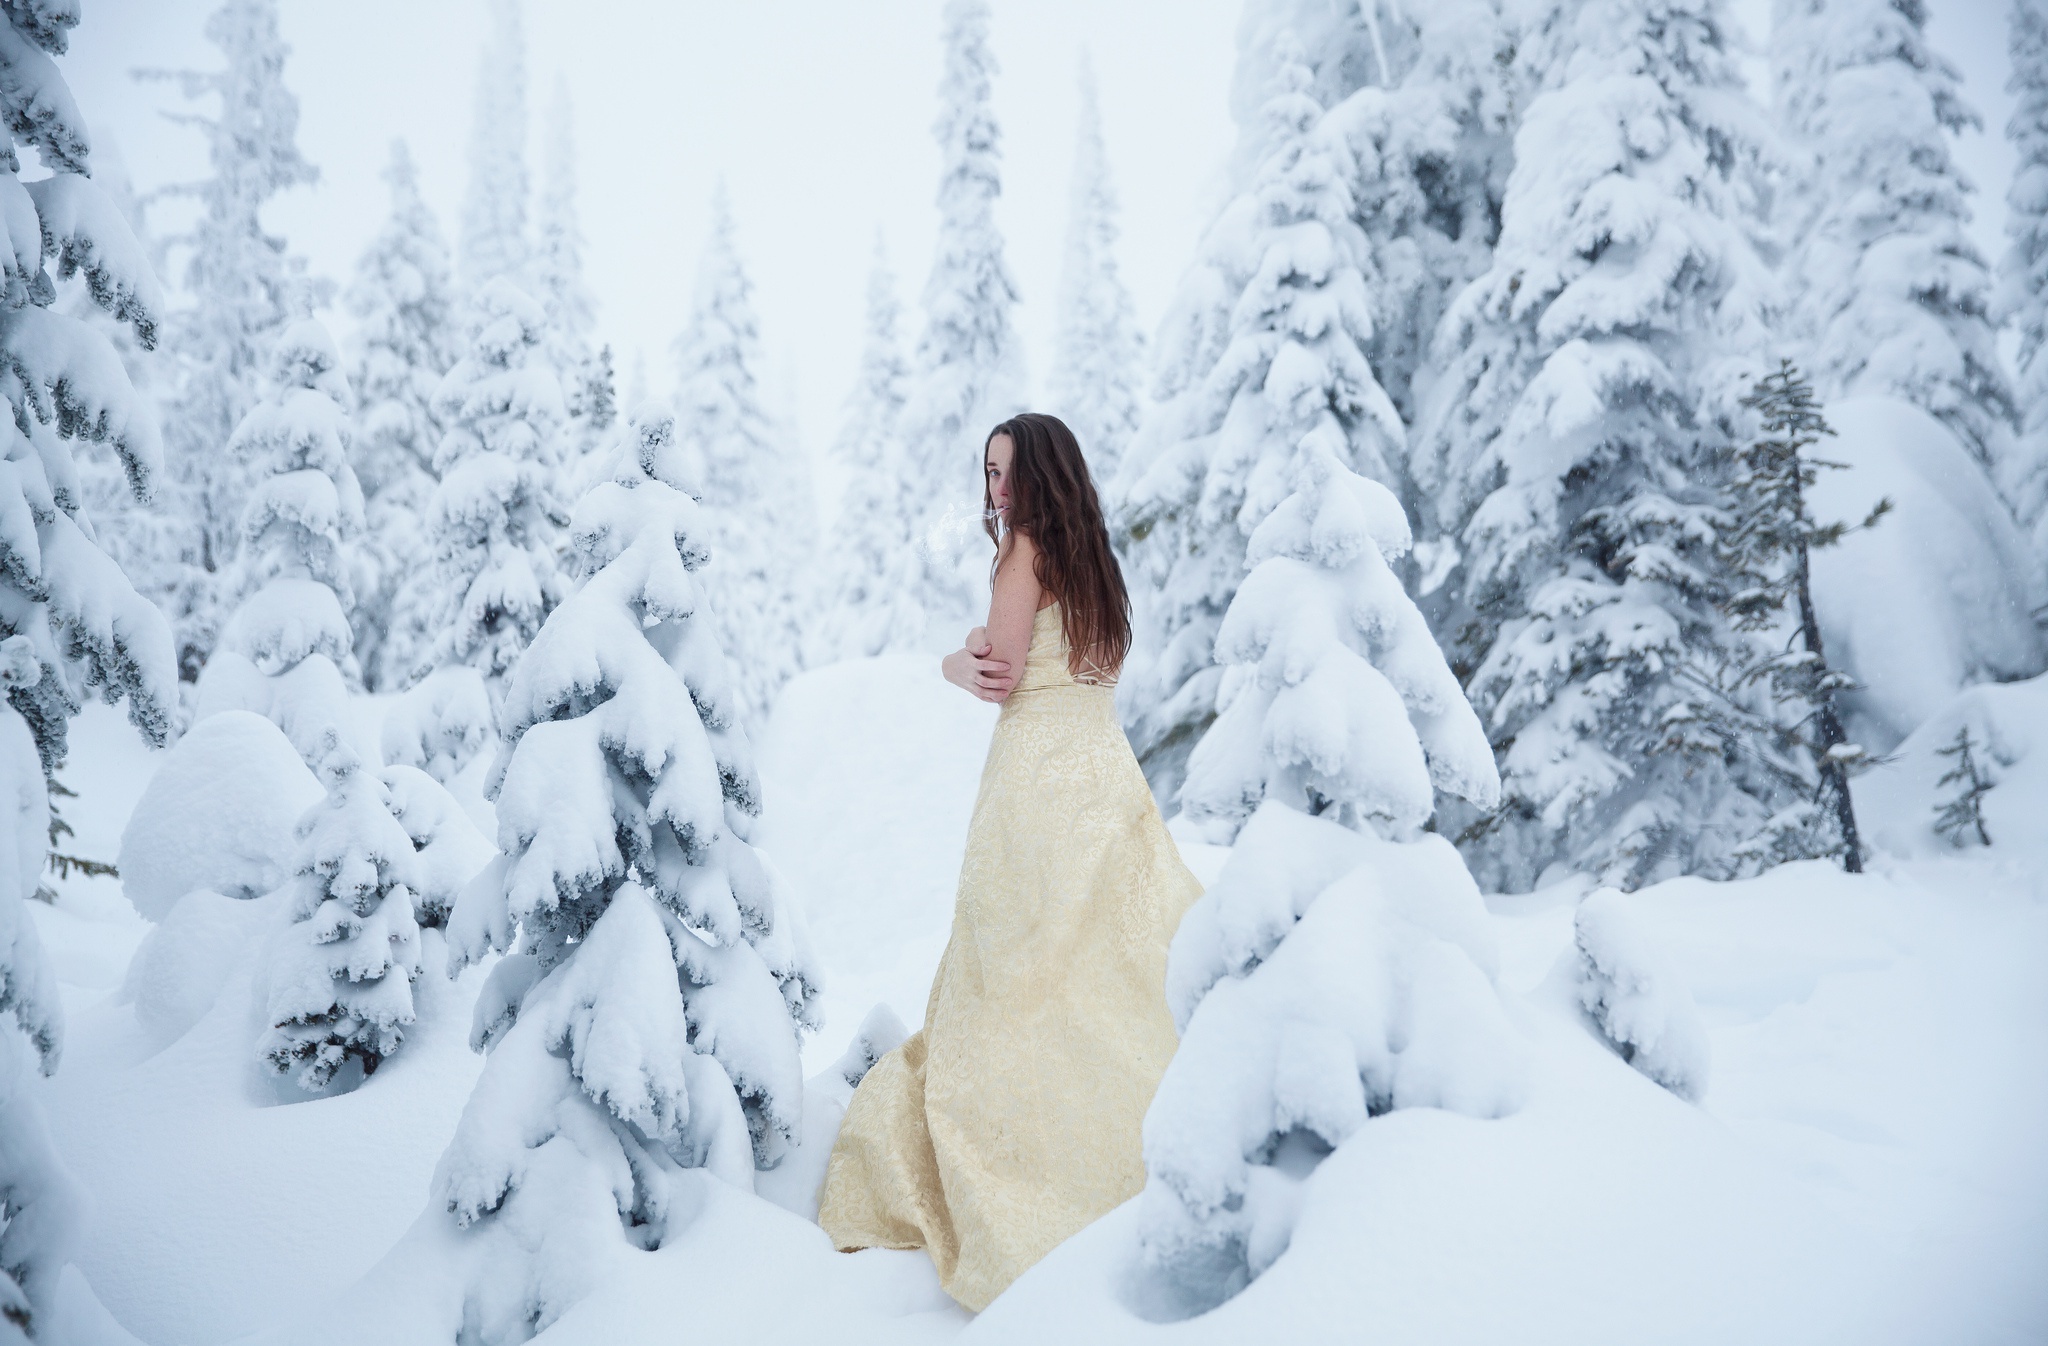 Девушка зима лес. Зимняя фотосессия в лесу. Девушка зимой в лесу. Девушка в Снежном лесу. Фотосессия зимой в платье.